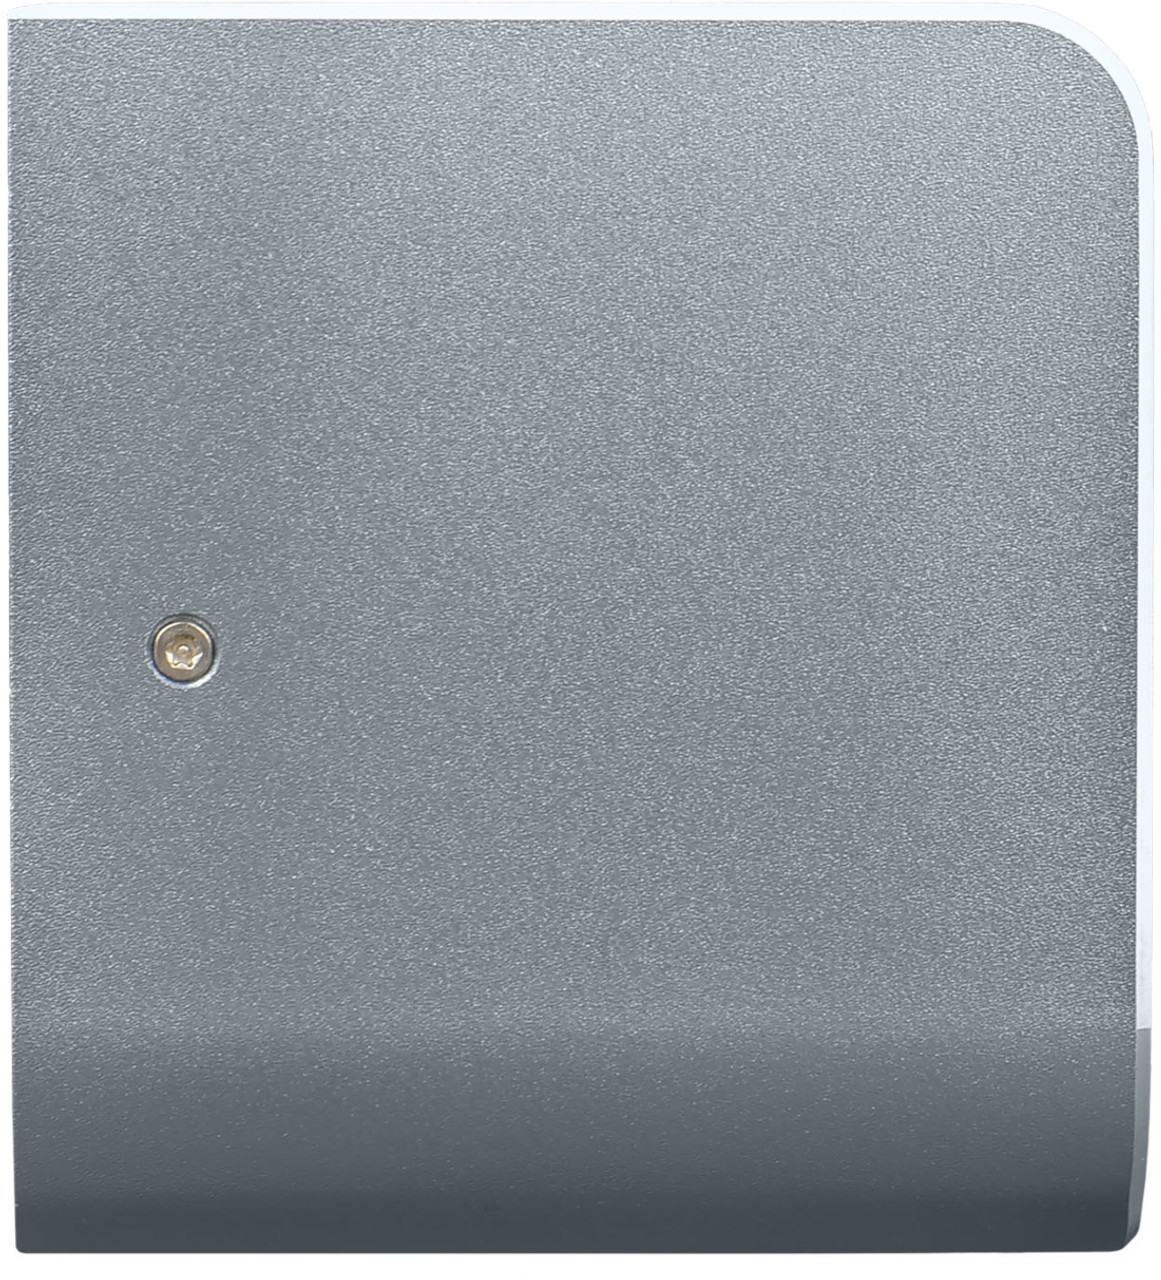 HD-D380PLUS-BLK - Diamond Hand Dryer PURE - Black - Side Profile